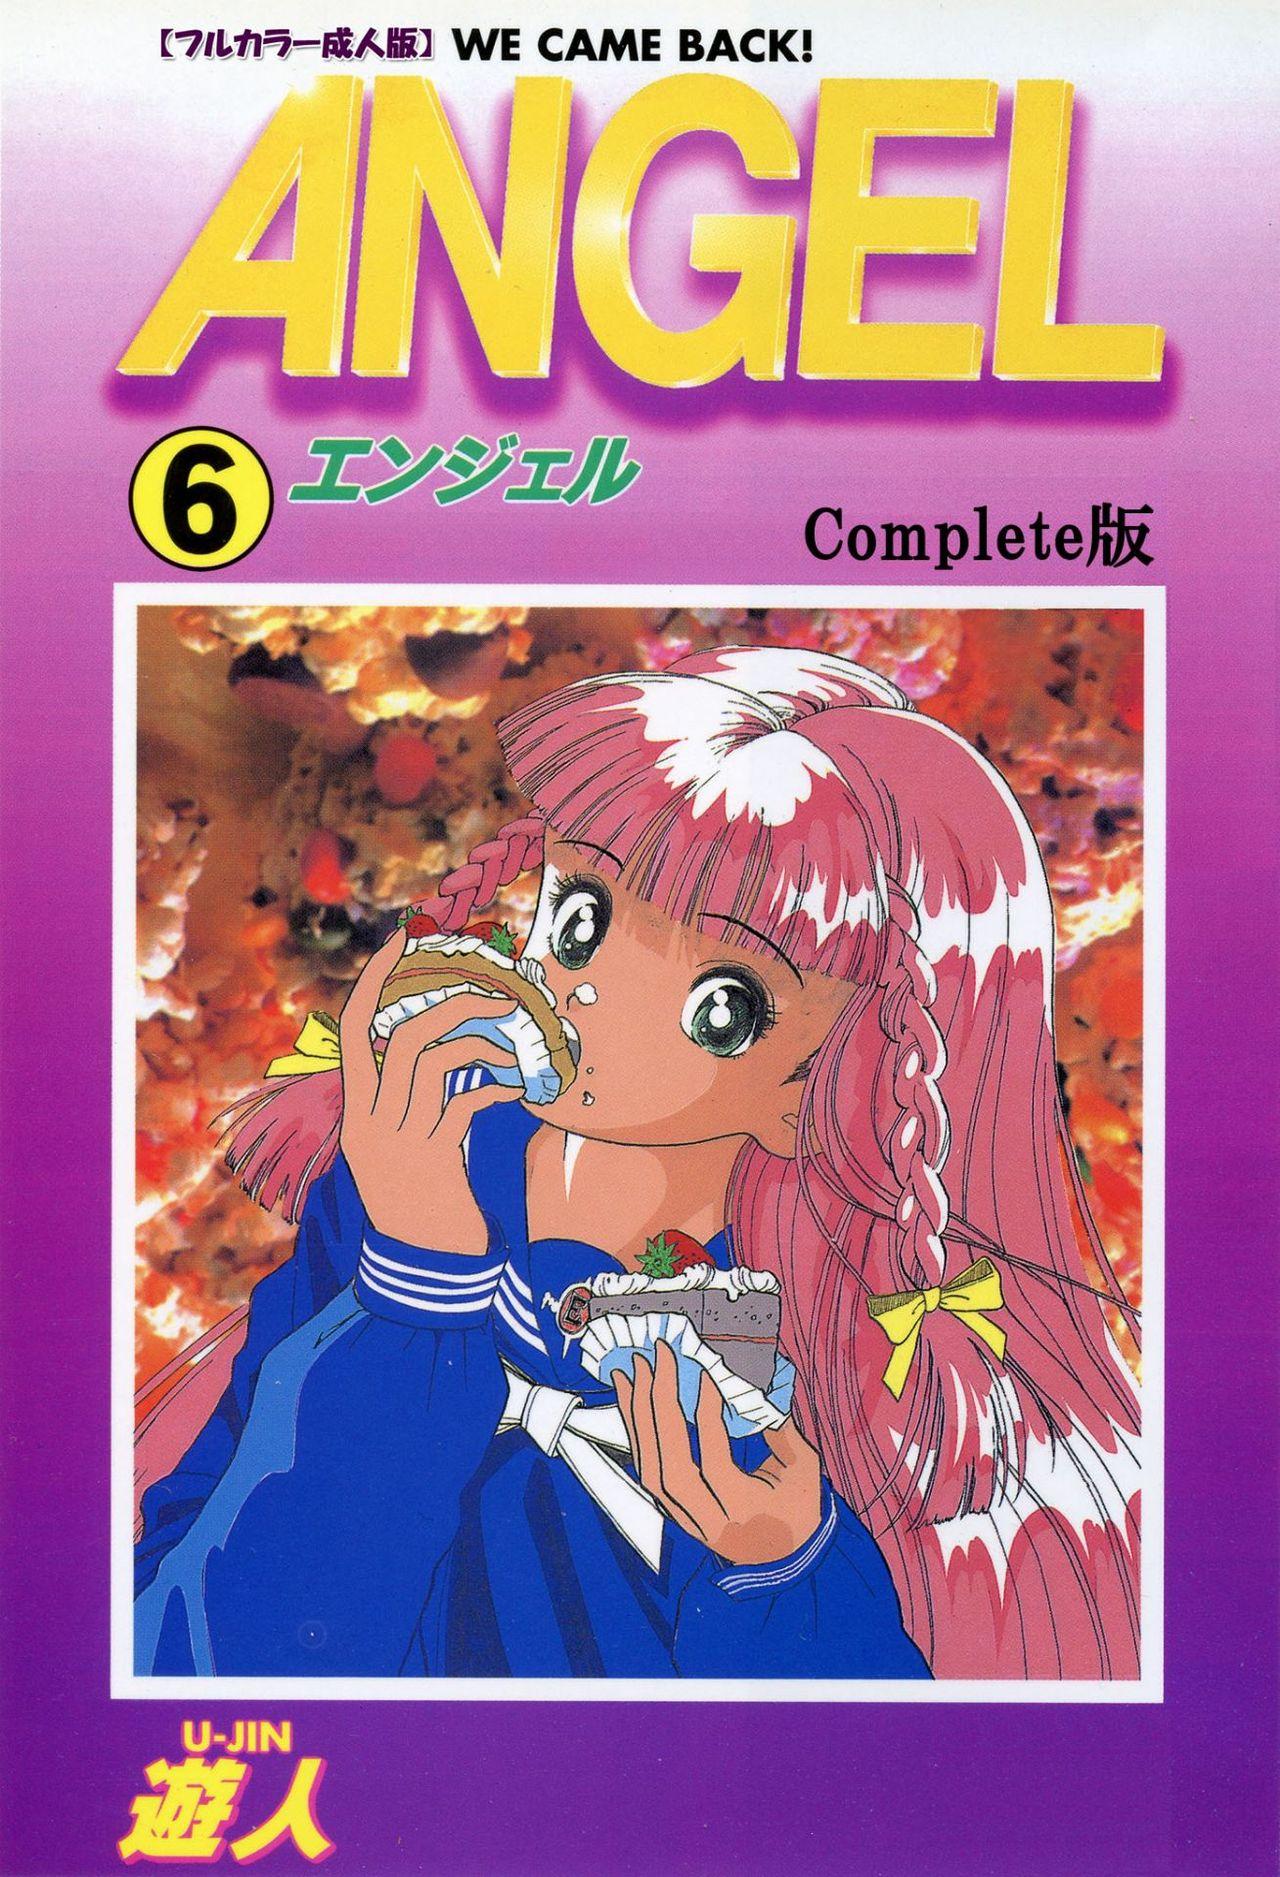 ANGEL 6 Completeban 0